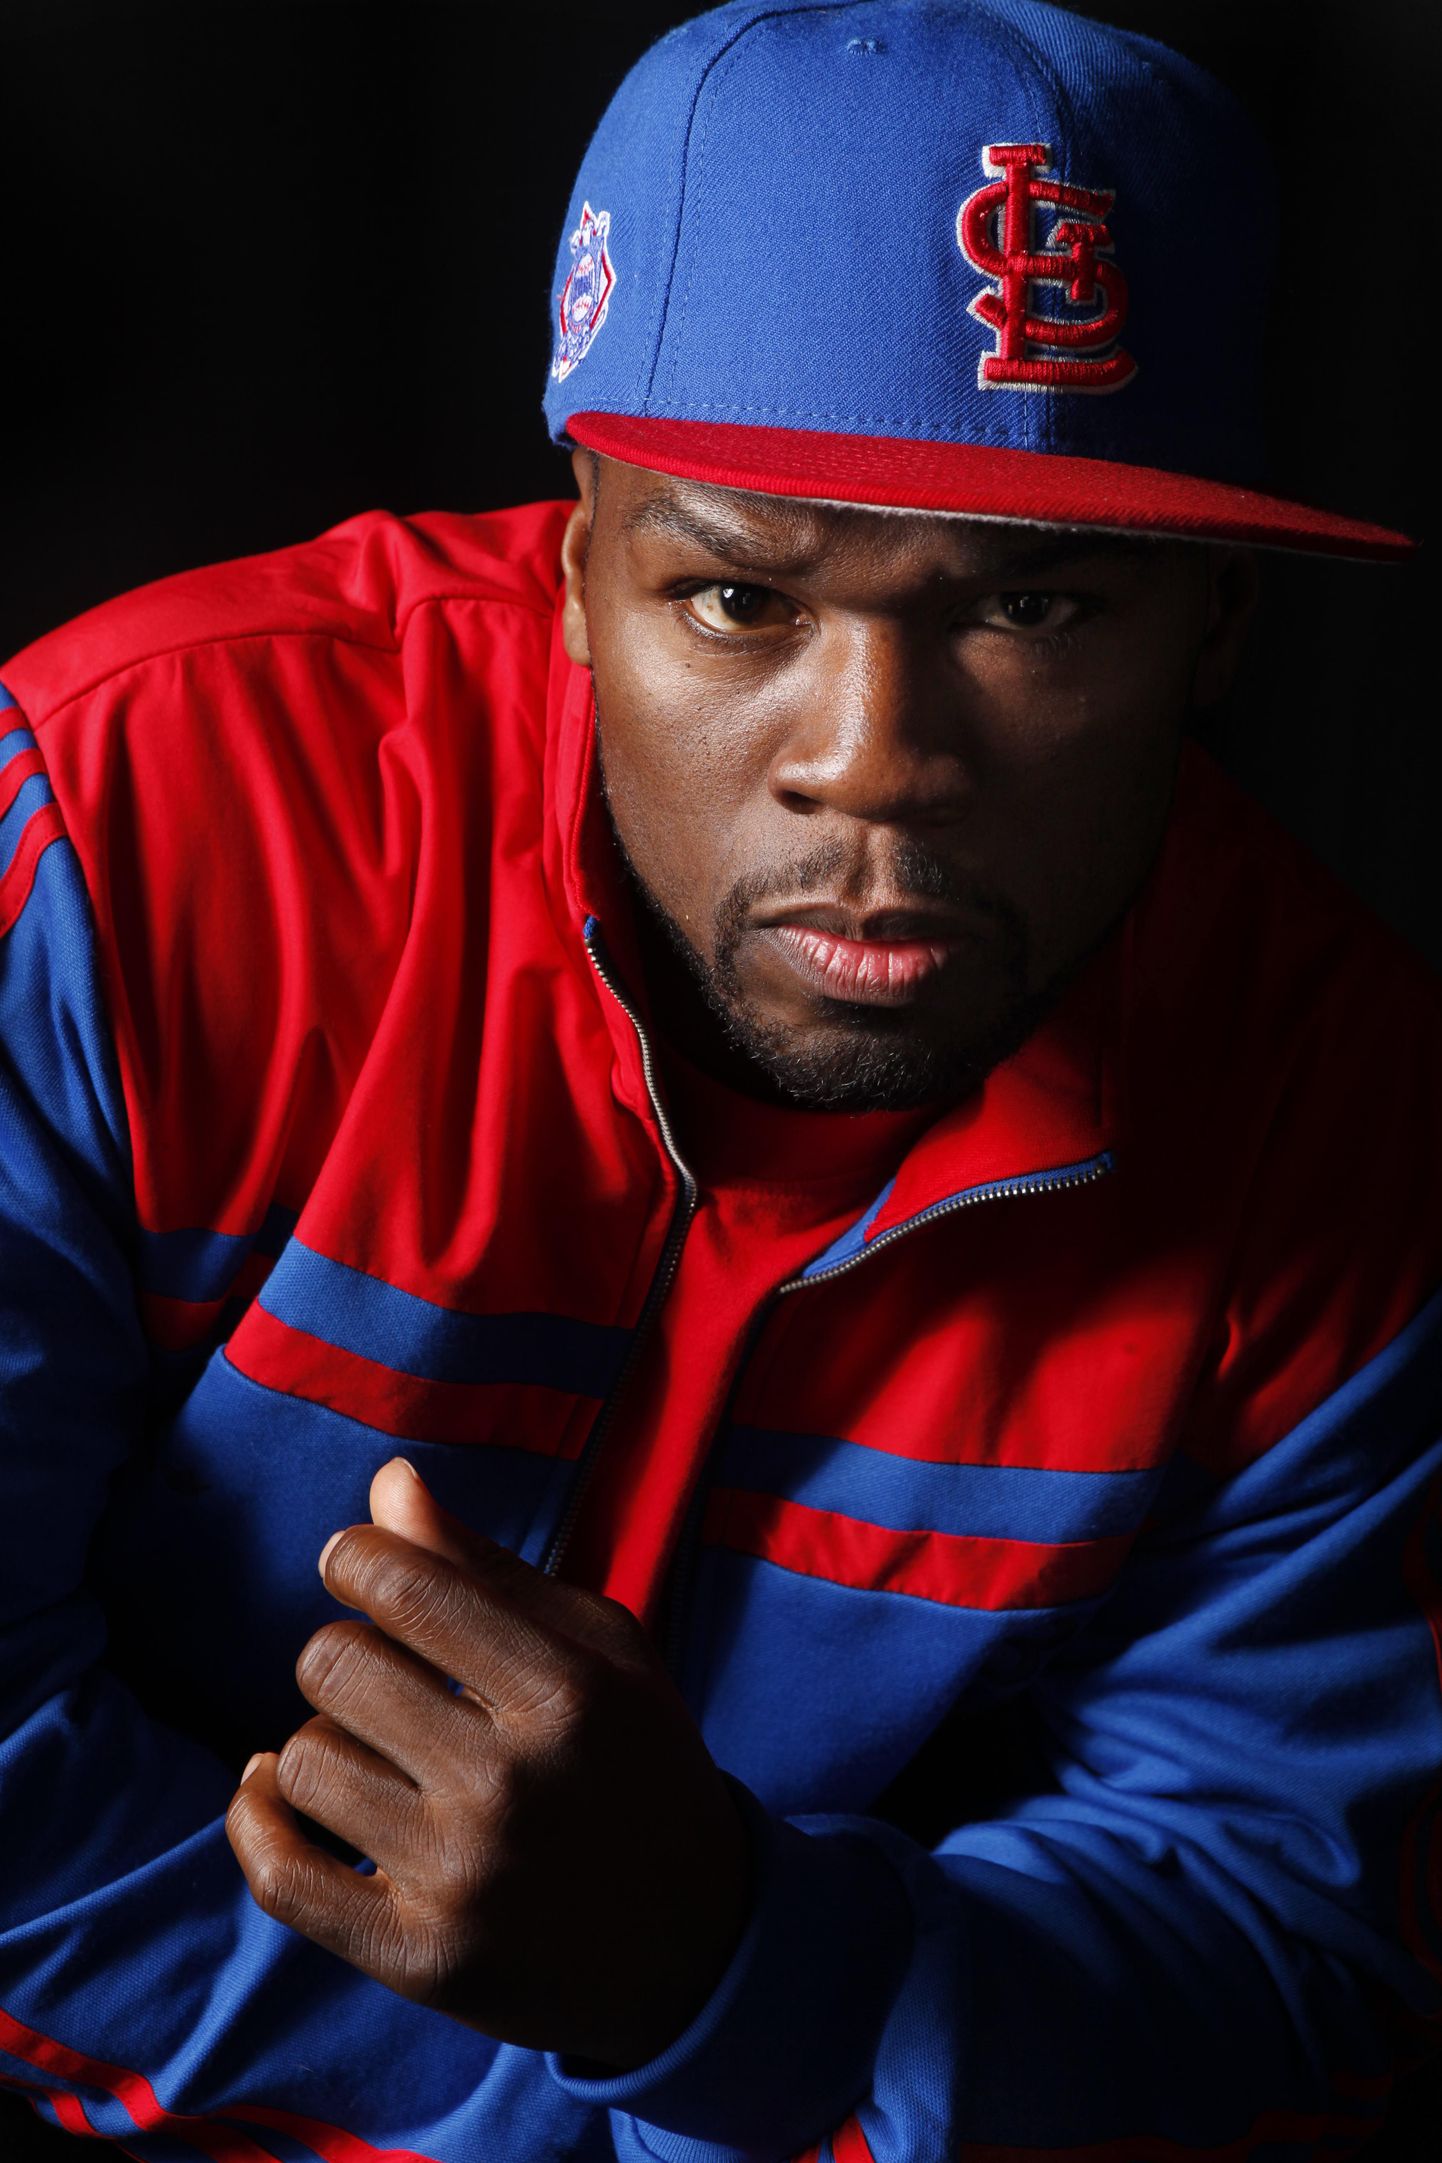 Curtis Jackson aka 50 Cent